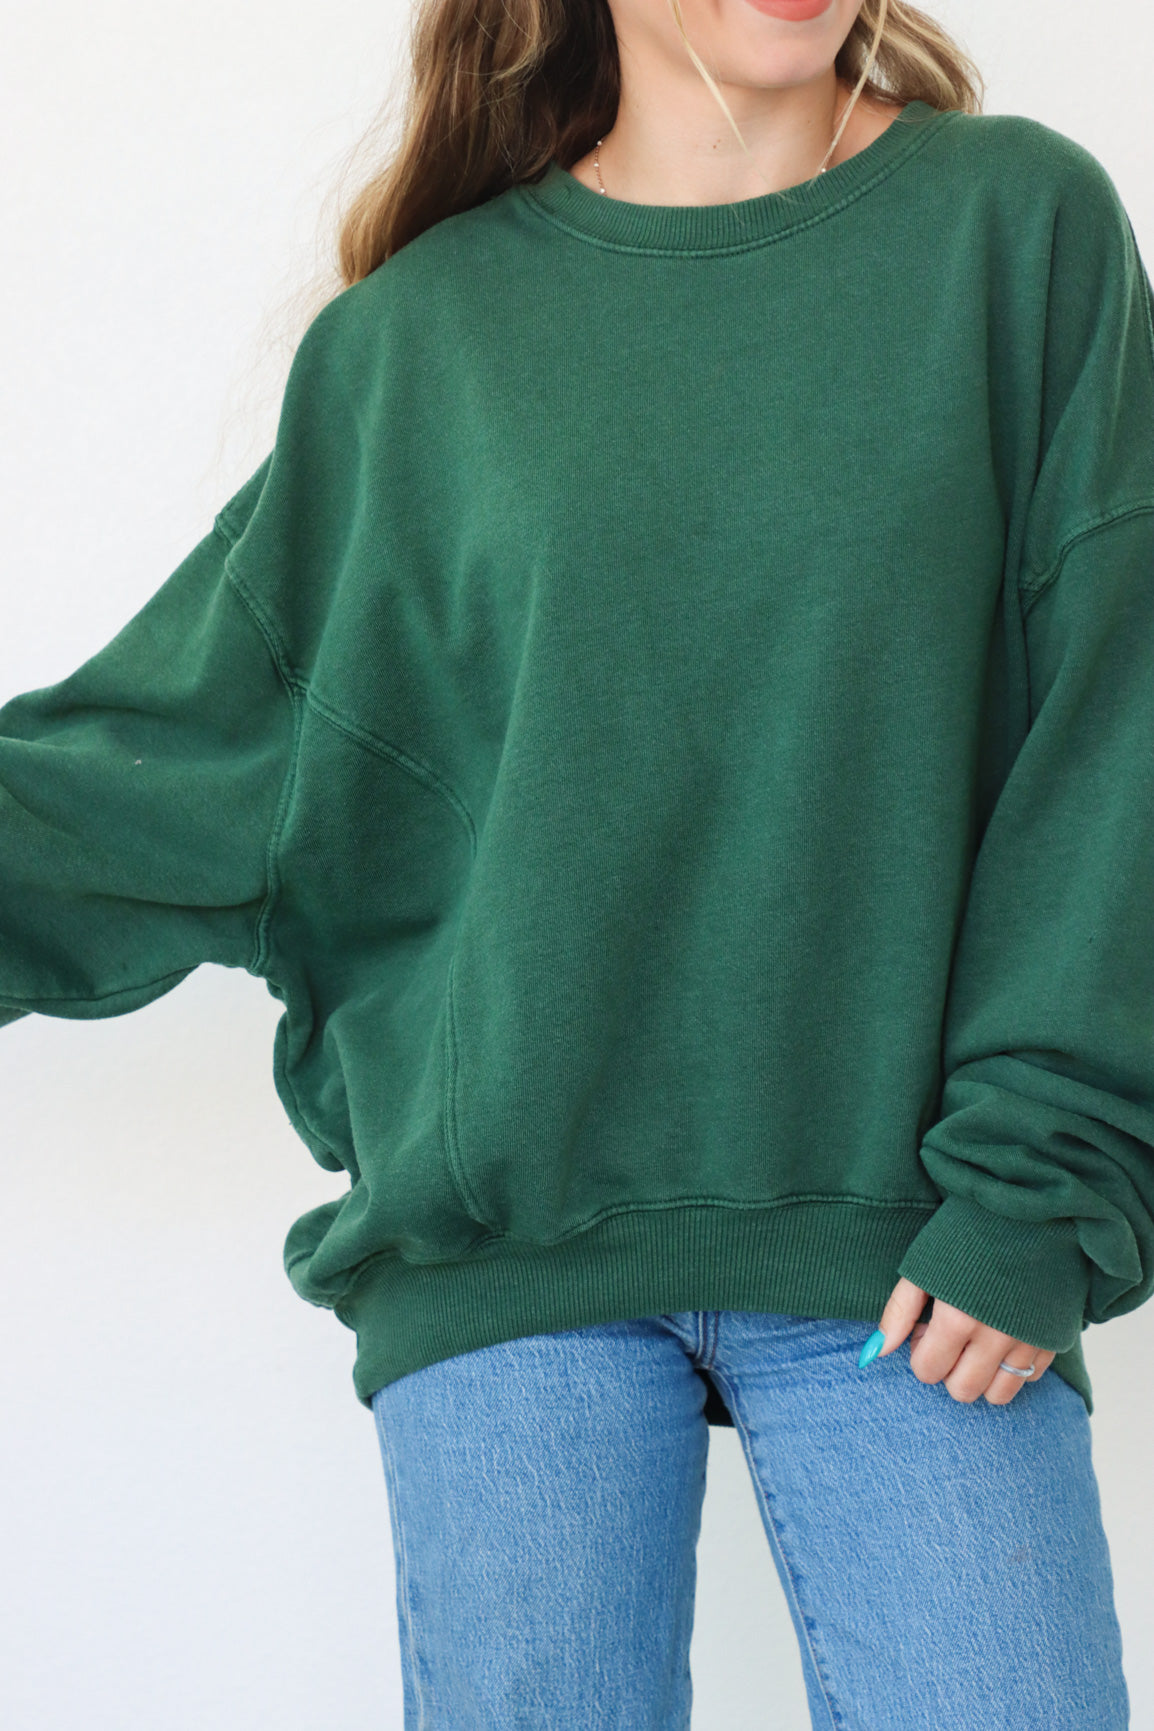 girl wearing dark green crewneck sweatshirt